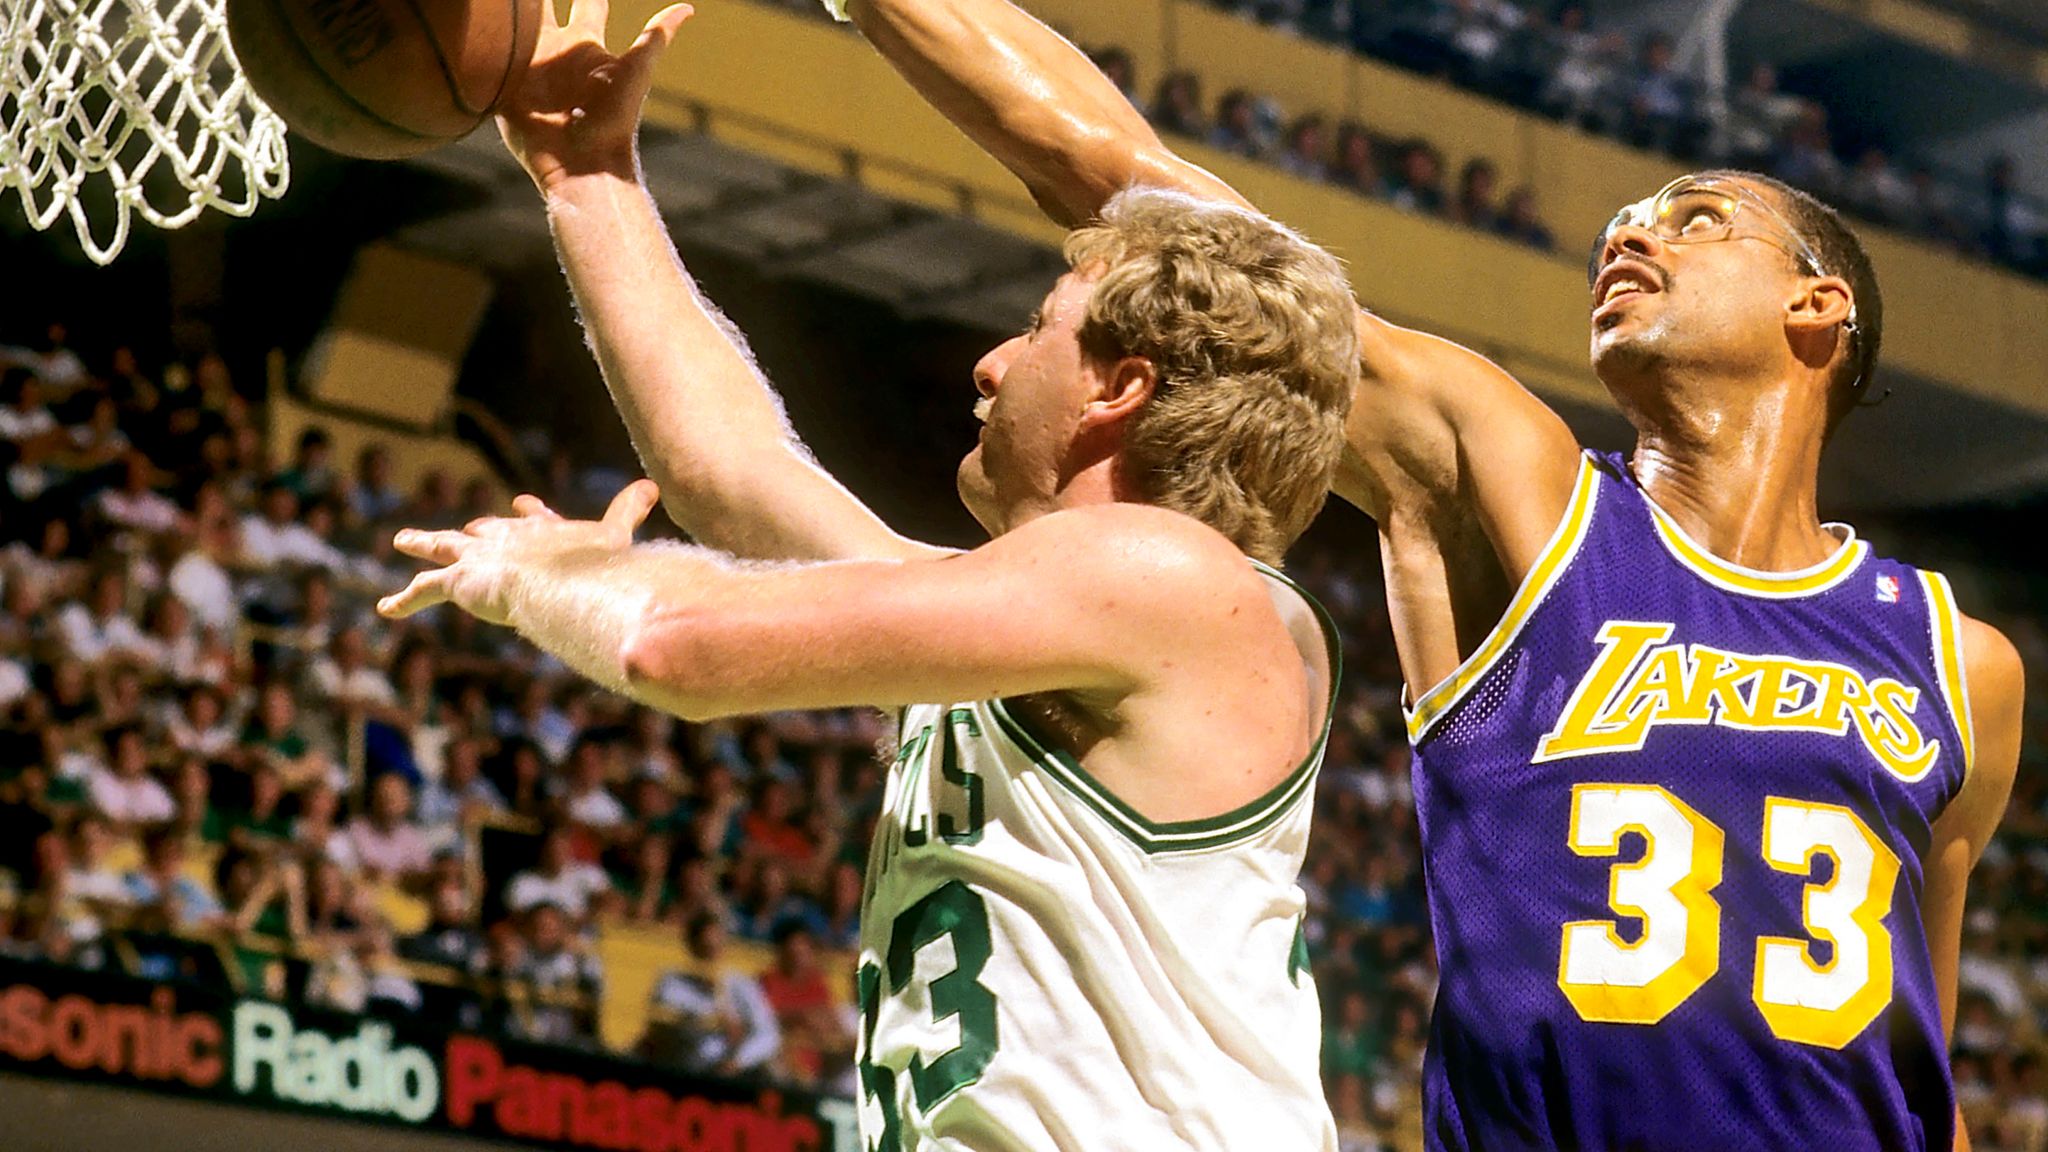 Most iconic NBA numbers: #33 – Larry Bird, Kareem Abdul-Jabbar, Scottie